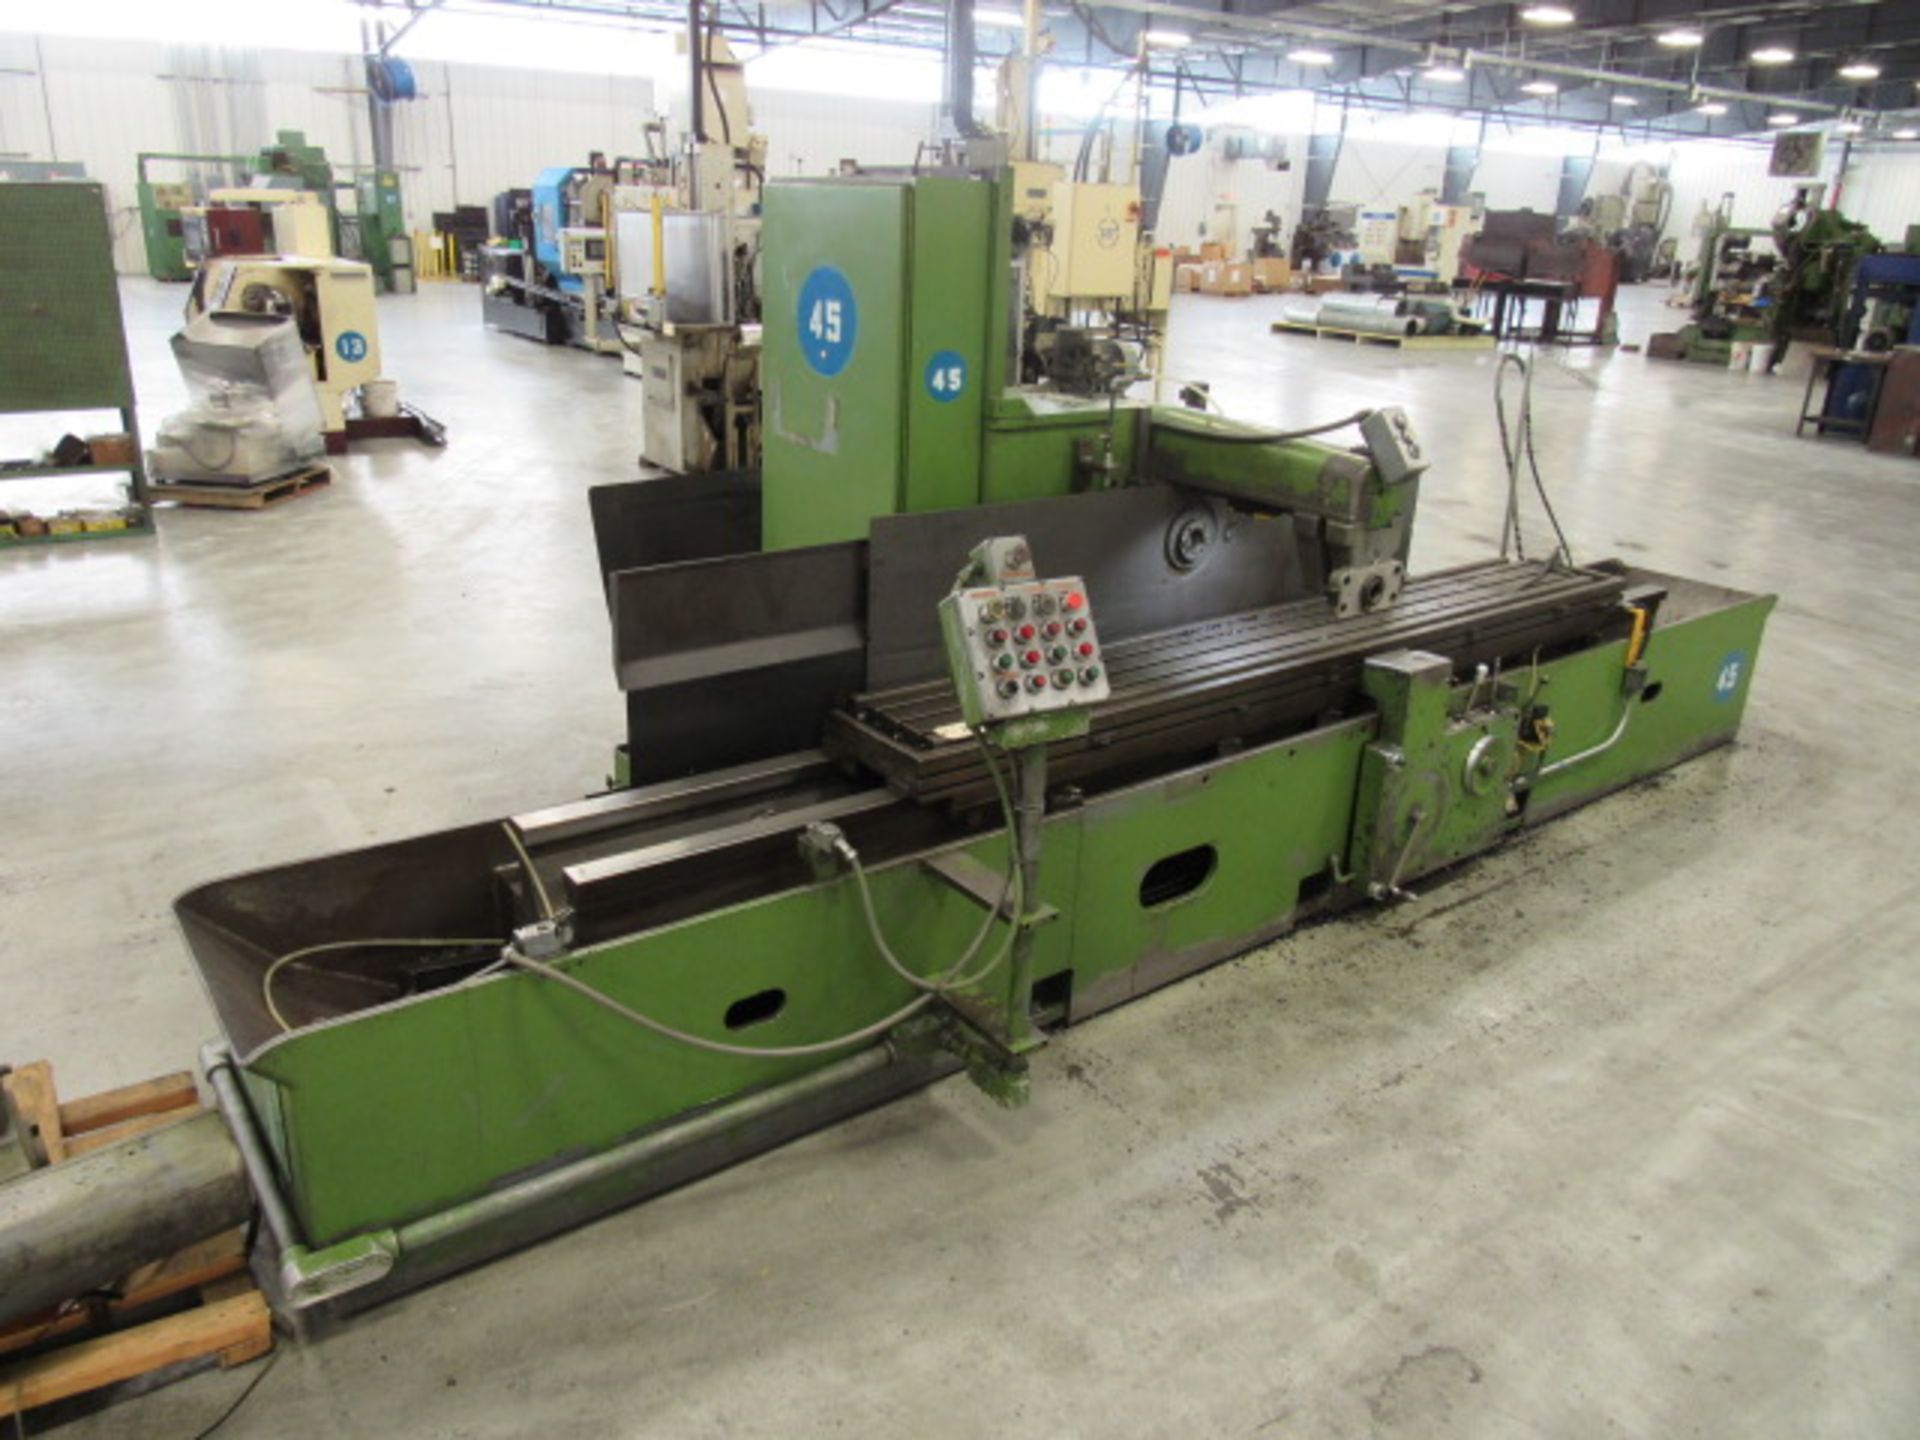 Cincinnati Hypowermatic Horizontal Production Milling Machine - Image 2 of 6